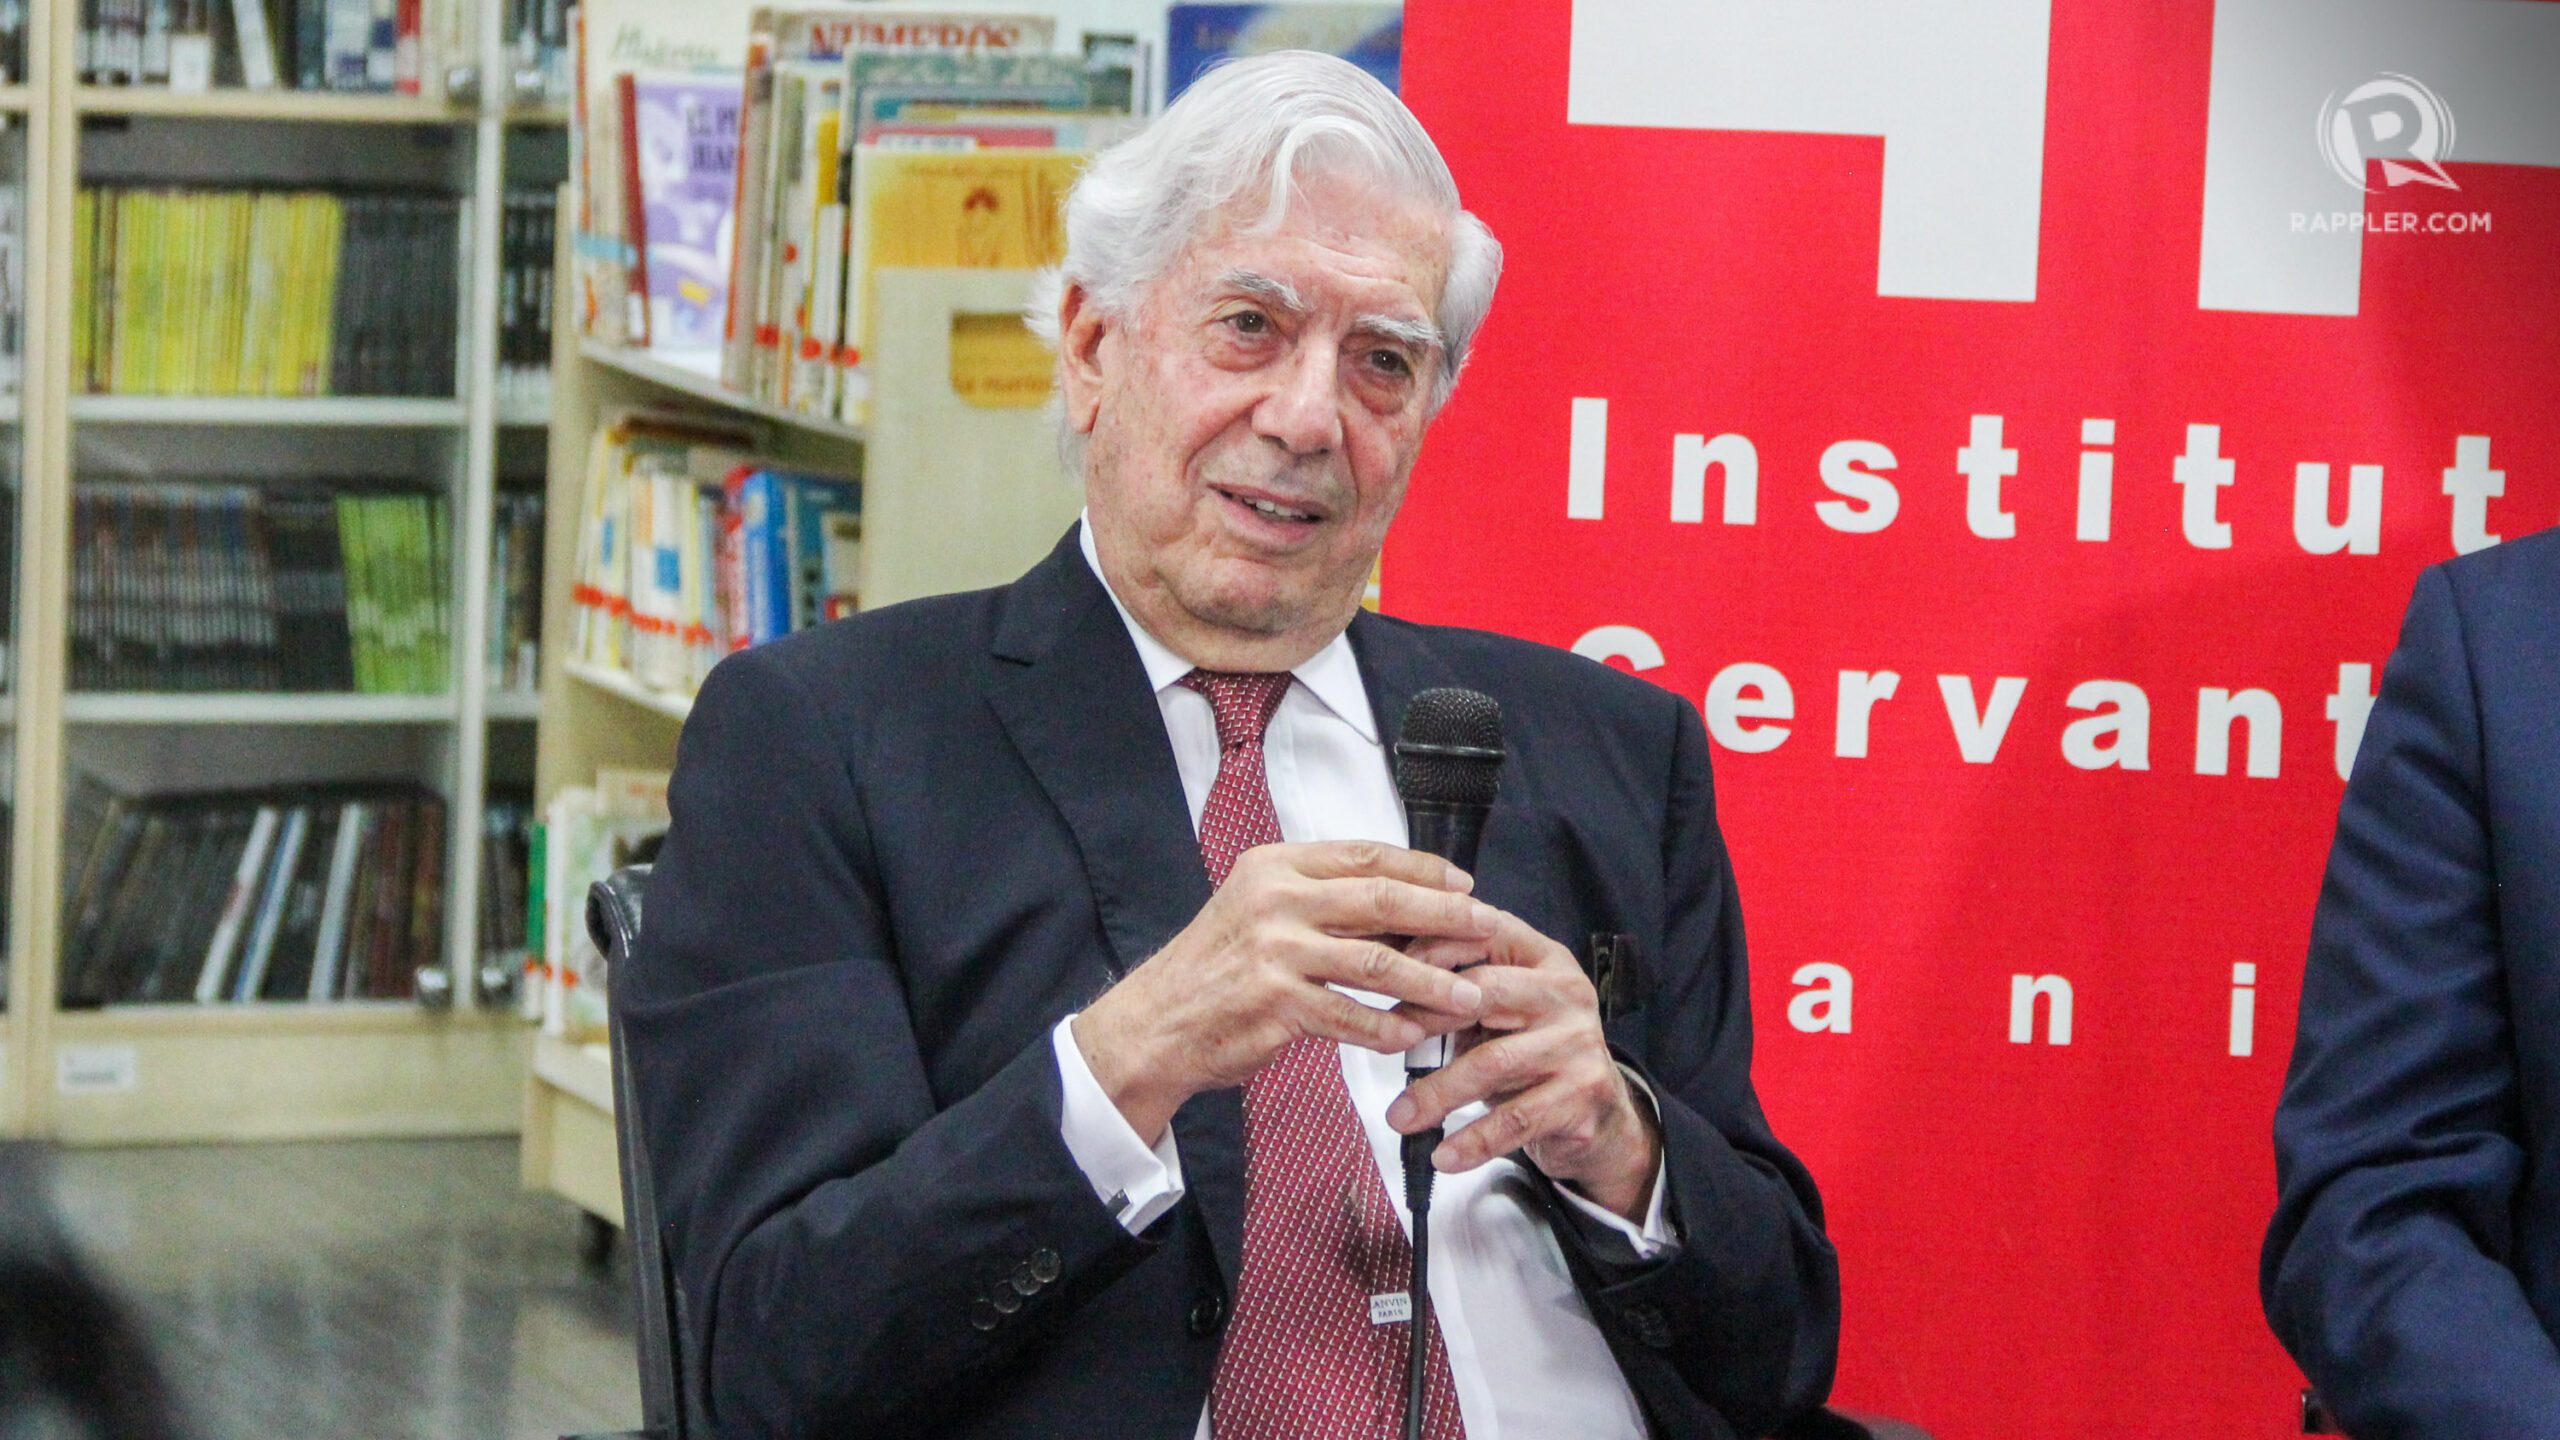 Mario Vargas Llosa on writing, love, and dictatorships